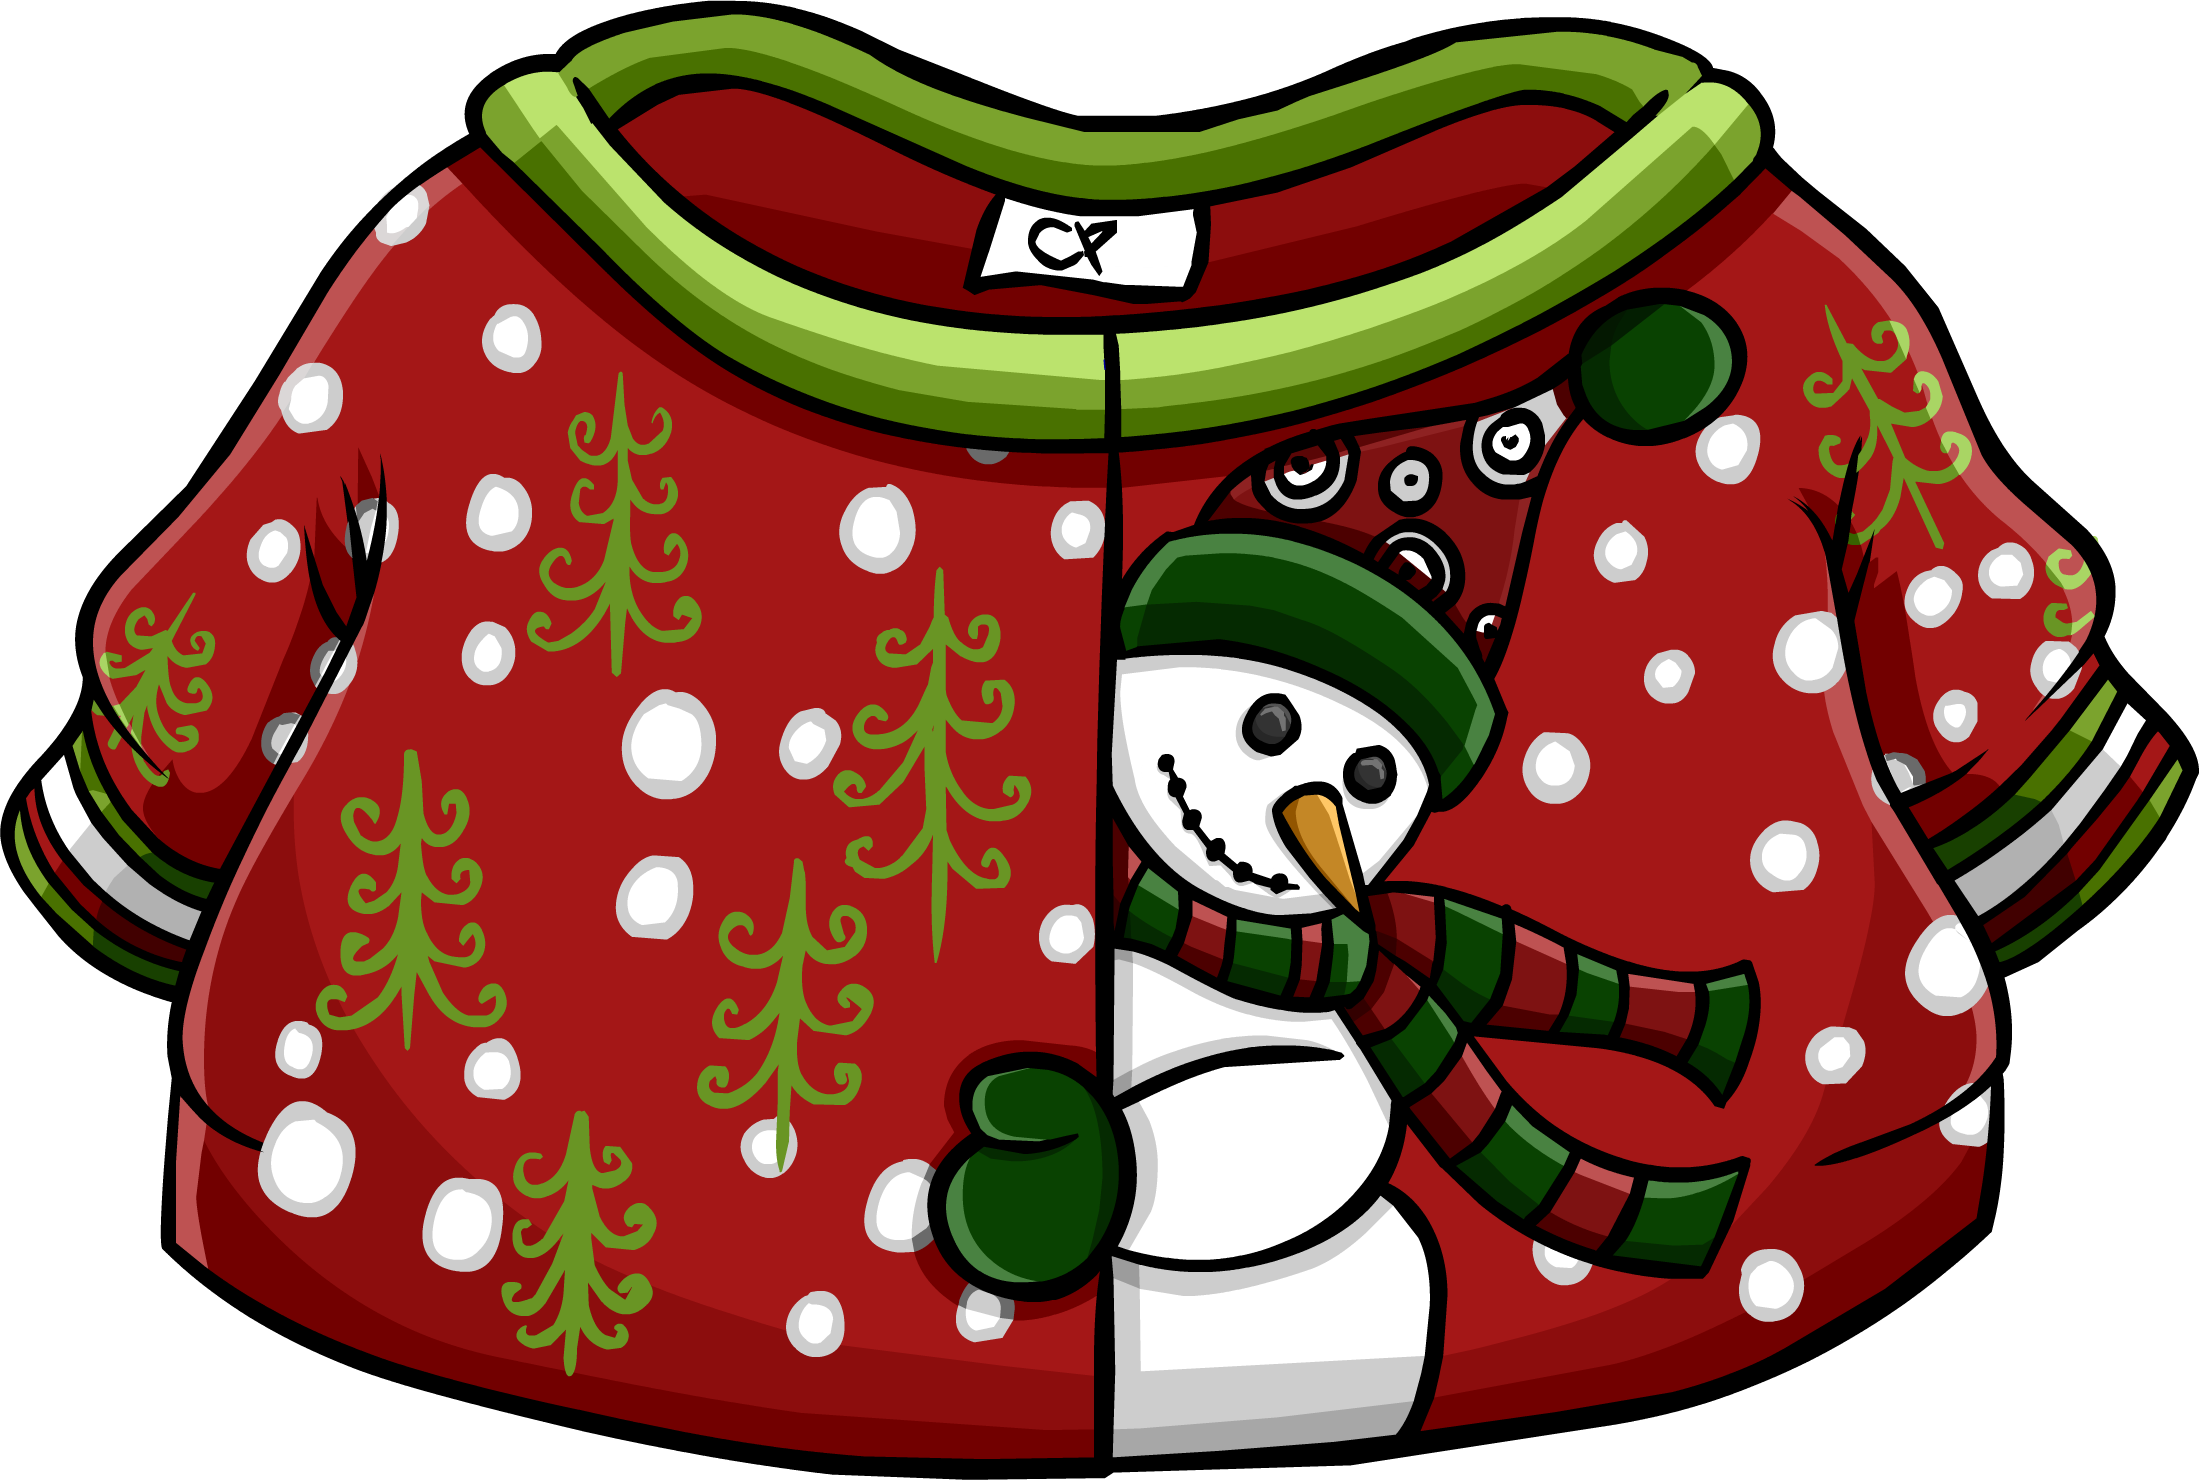 clipart snowman sweater